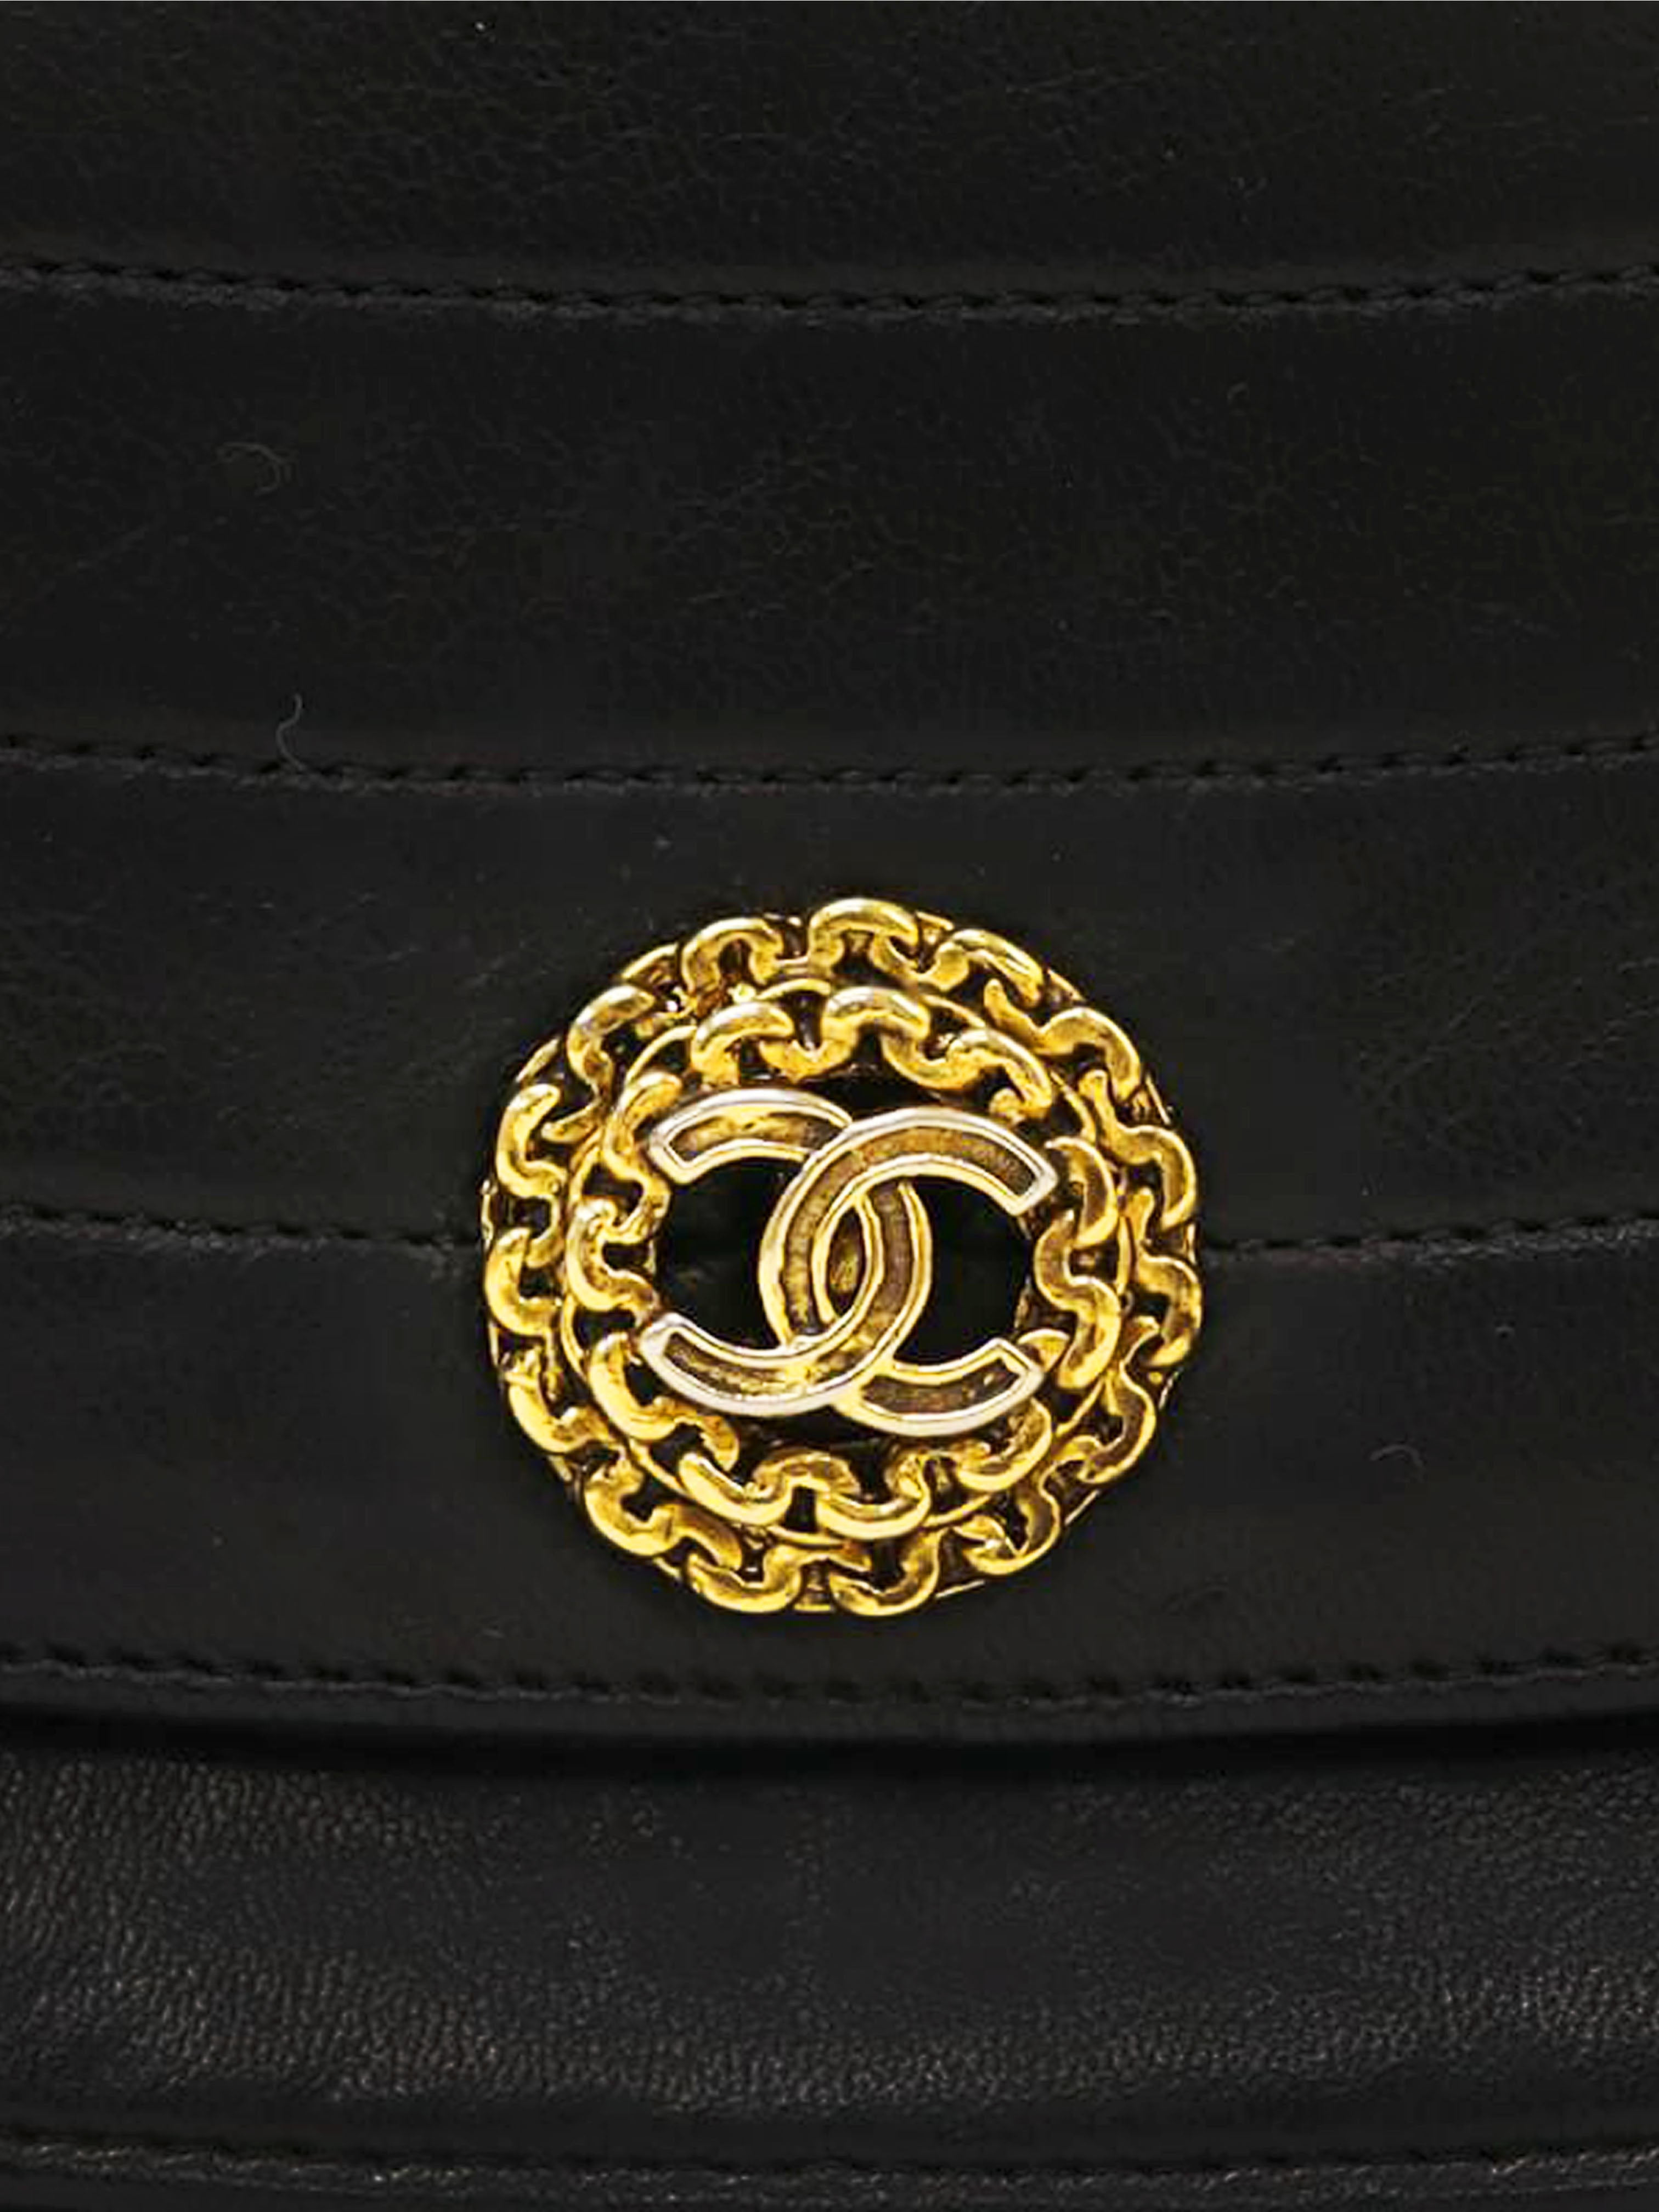 Chanel 2007 Black Lambskin Leather Half Moon Wallet On Chain · INTO